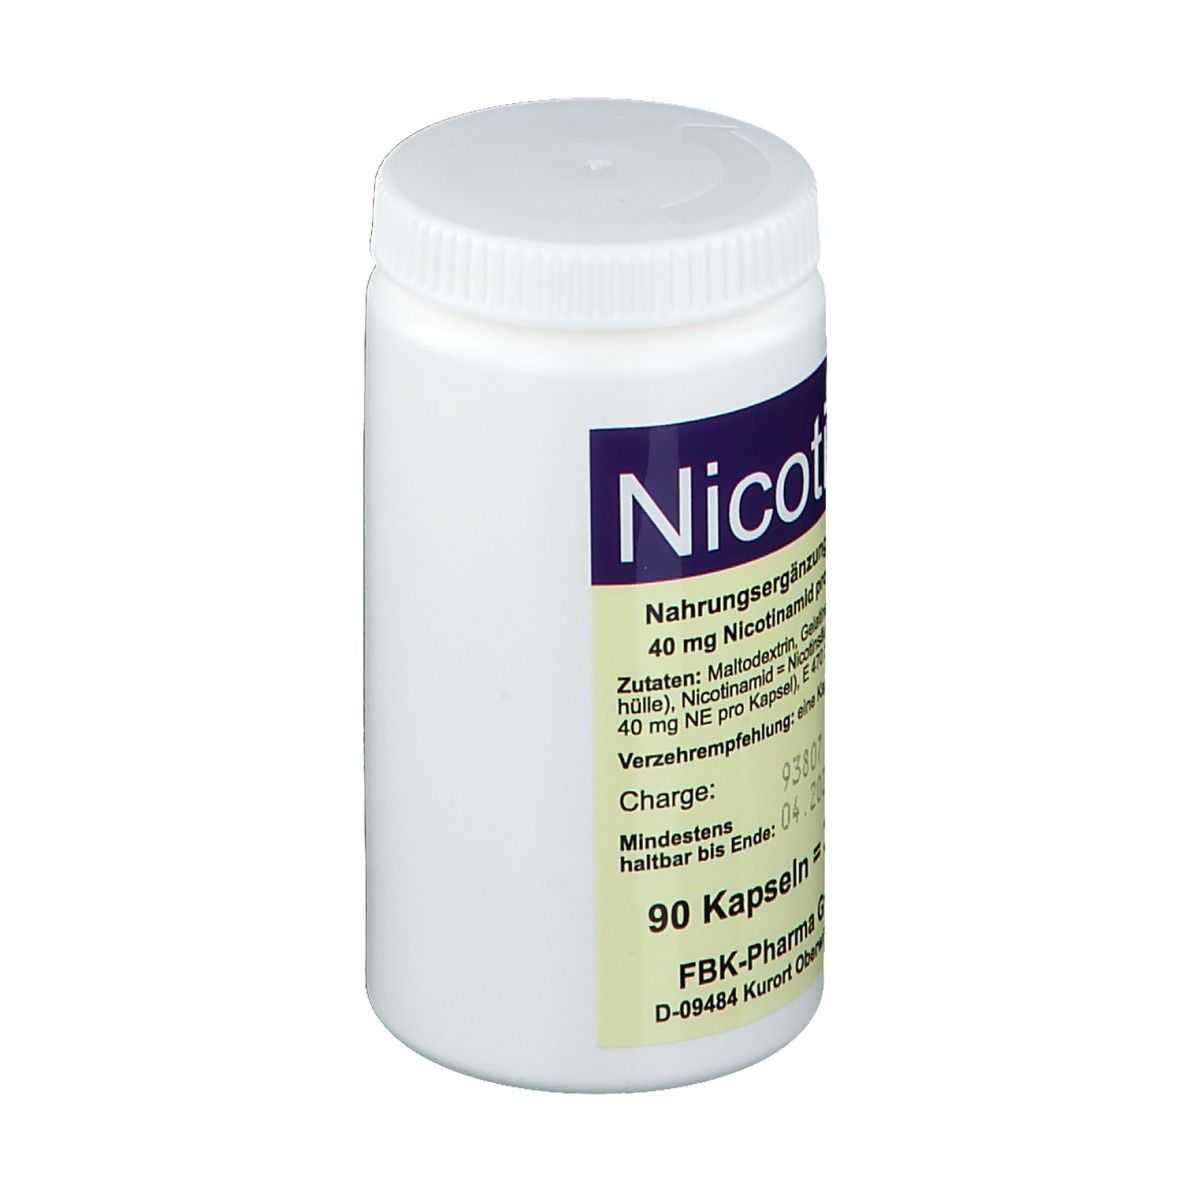 Schmiedeberger Nicotinamid